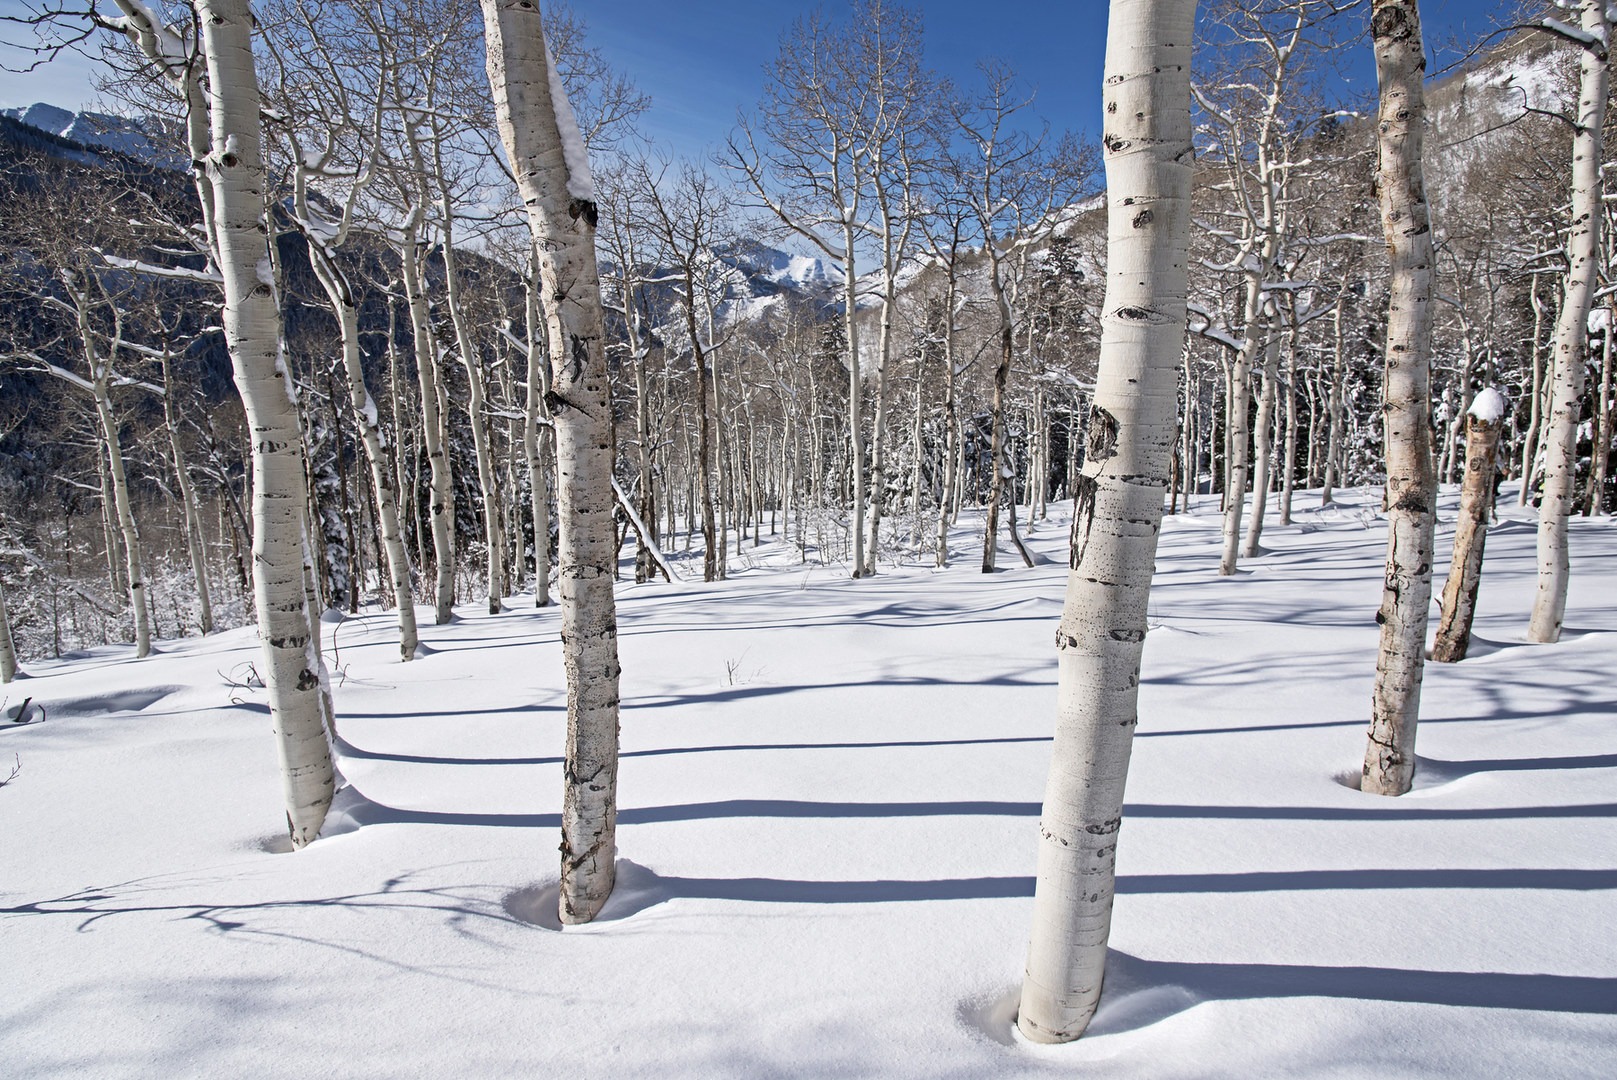 5 Great Snowshoe Trails Near Salt Lake City - Outdoor Project